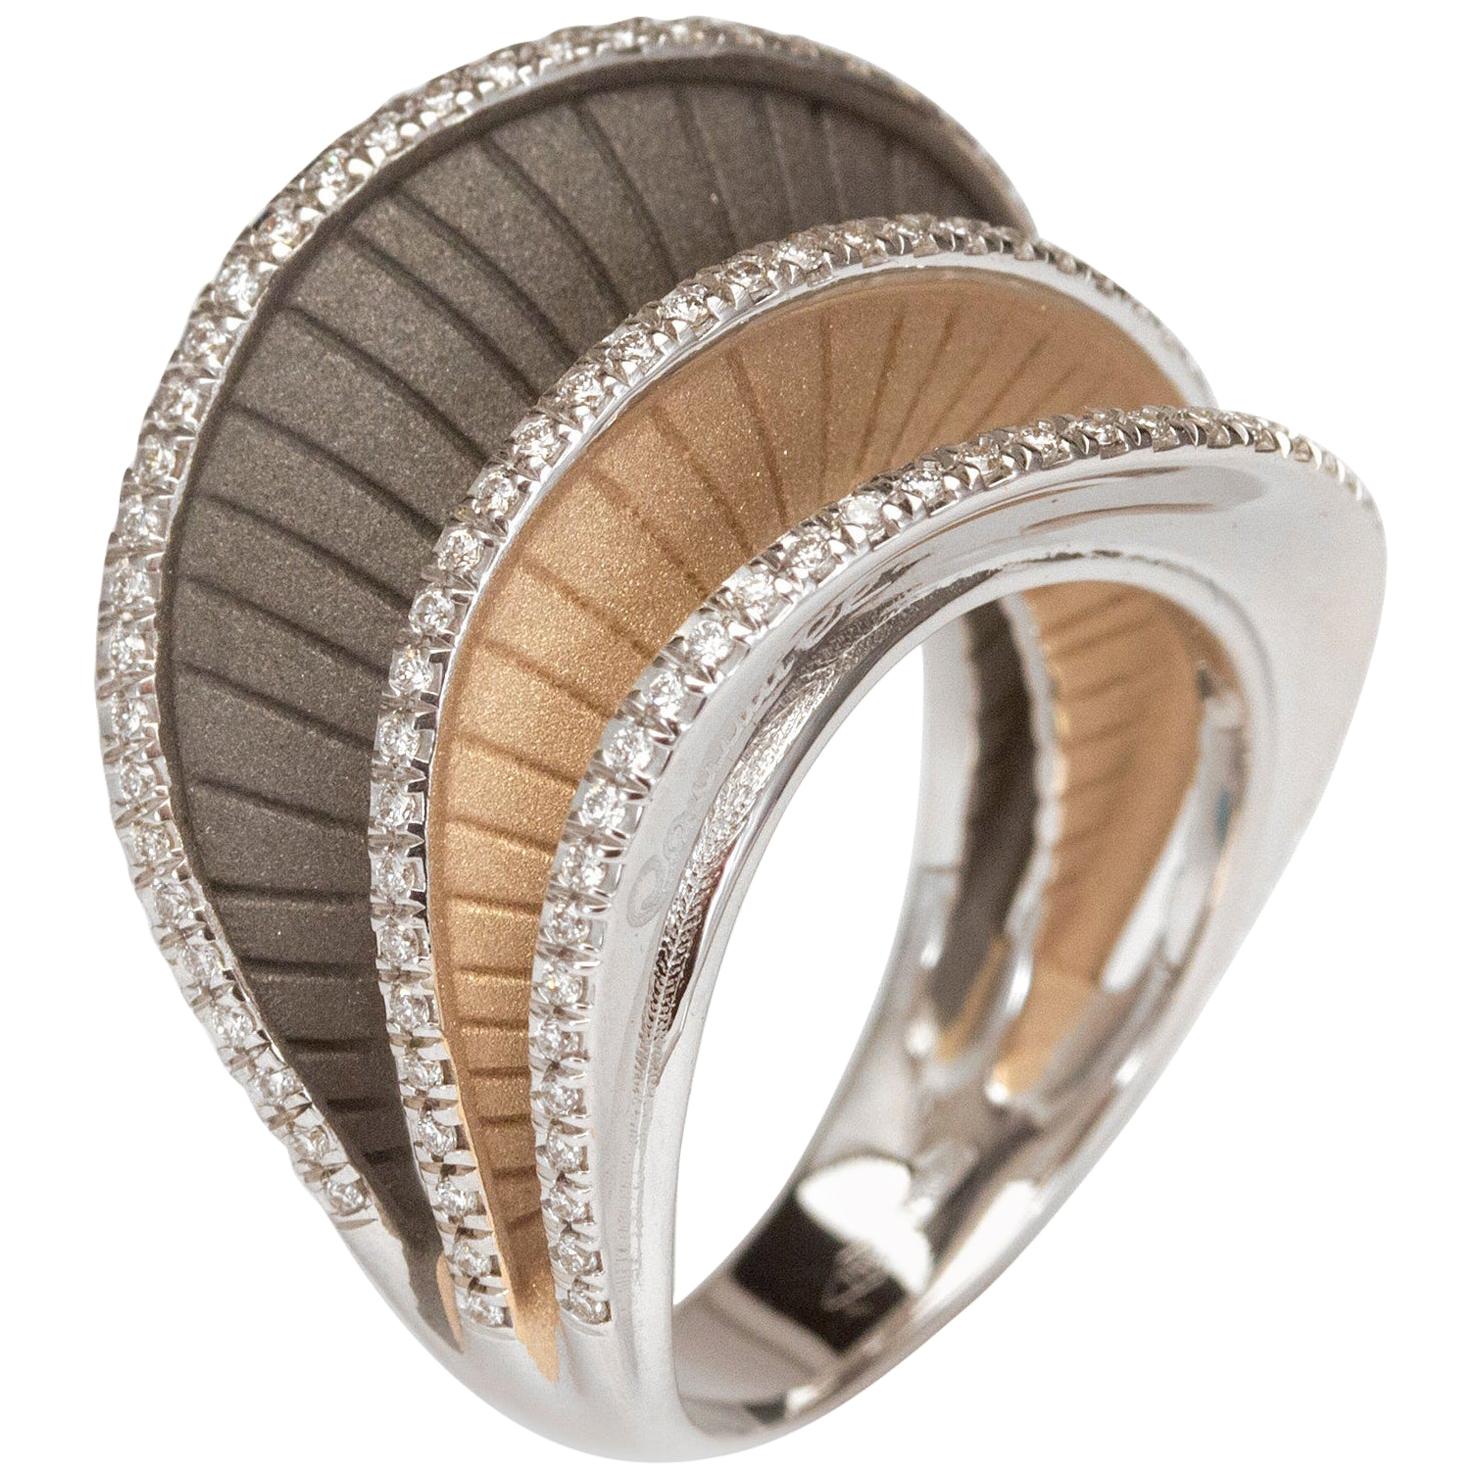 For Sale:  Annamaria Cammilli "Regina" Ring with Diamonds in Three Colors of 18 Karat Gold